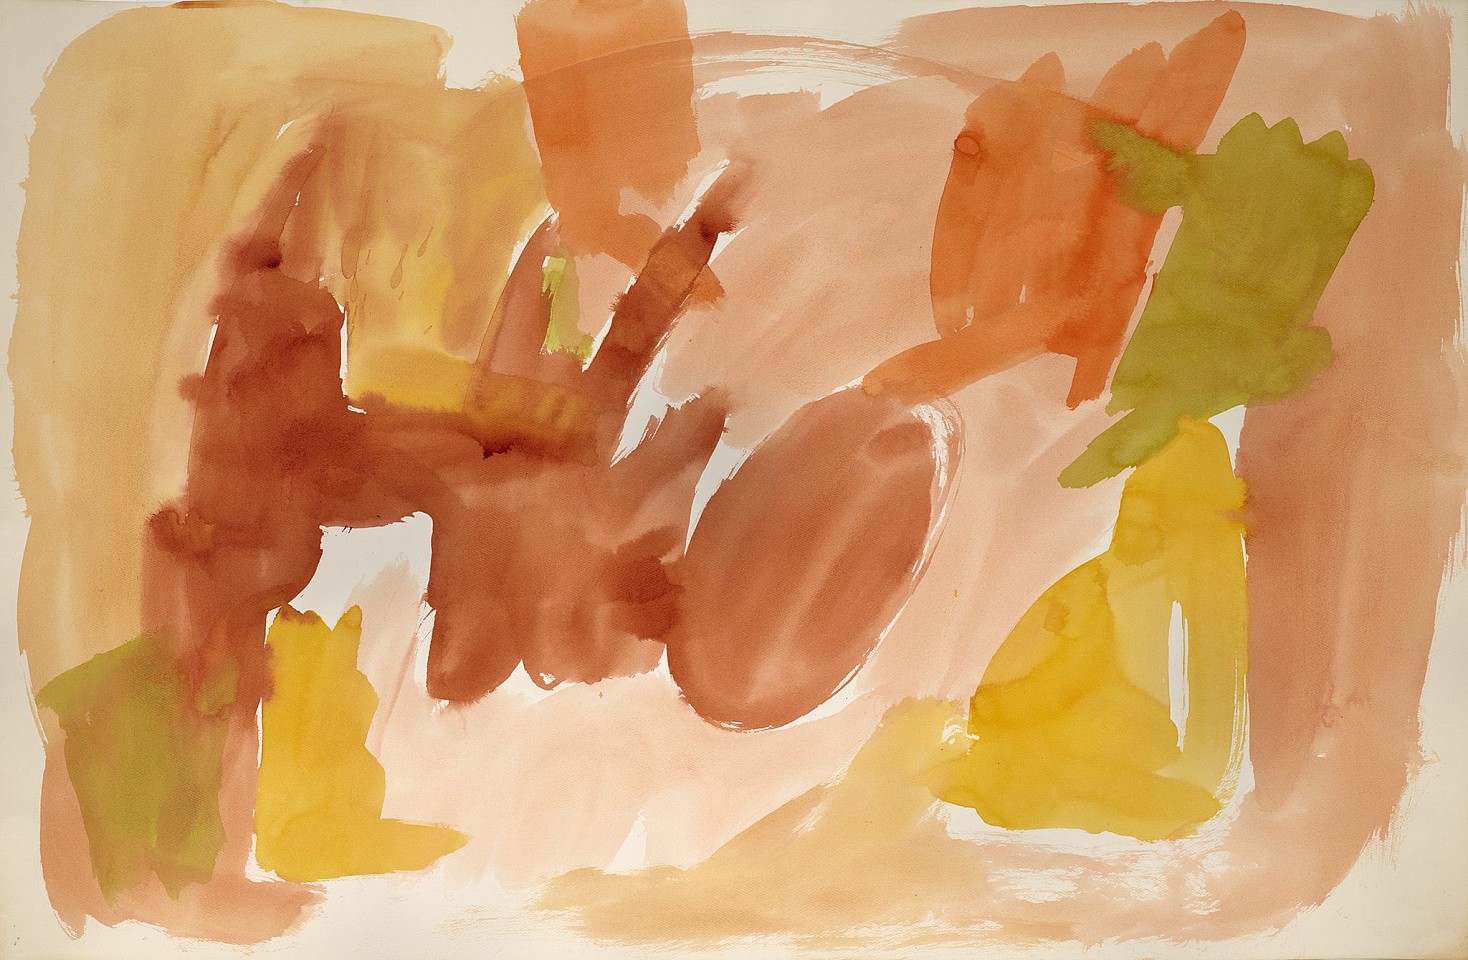 Ethel Schwabacher, Untitled, c. 1960-62
Colored ink on paper, 26 1/8 x 40 in. (66.4 x 101.6 cm)
SCHW-00105